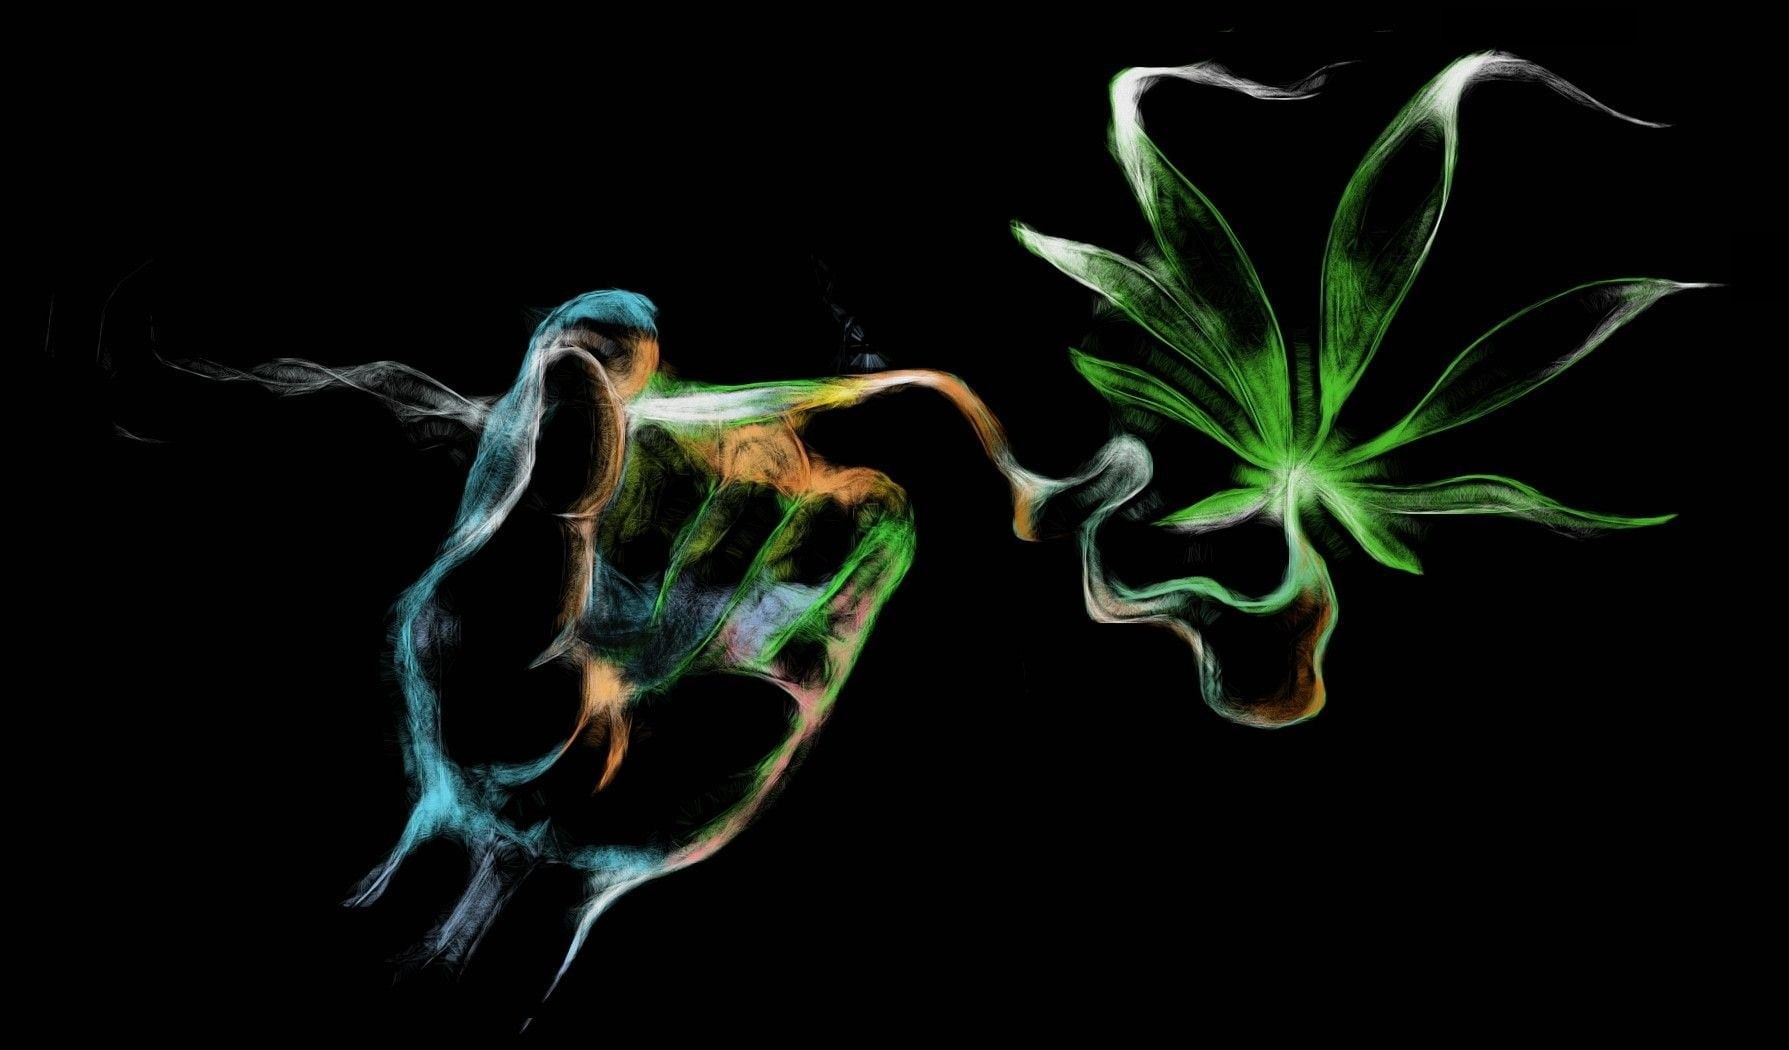  Weed Hintergrundbild 1789x1050. Wallpaper / weed, rasta, drug, 720P, psychedelic, plant, marijuana, cannabis, reggae, drugs, trippy, nature free download